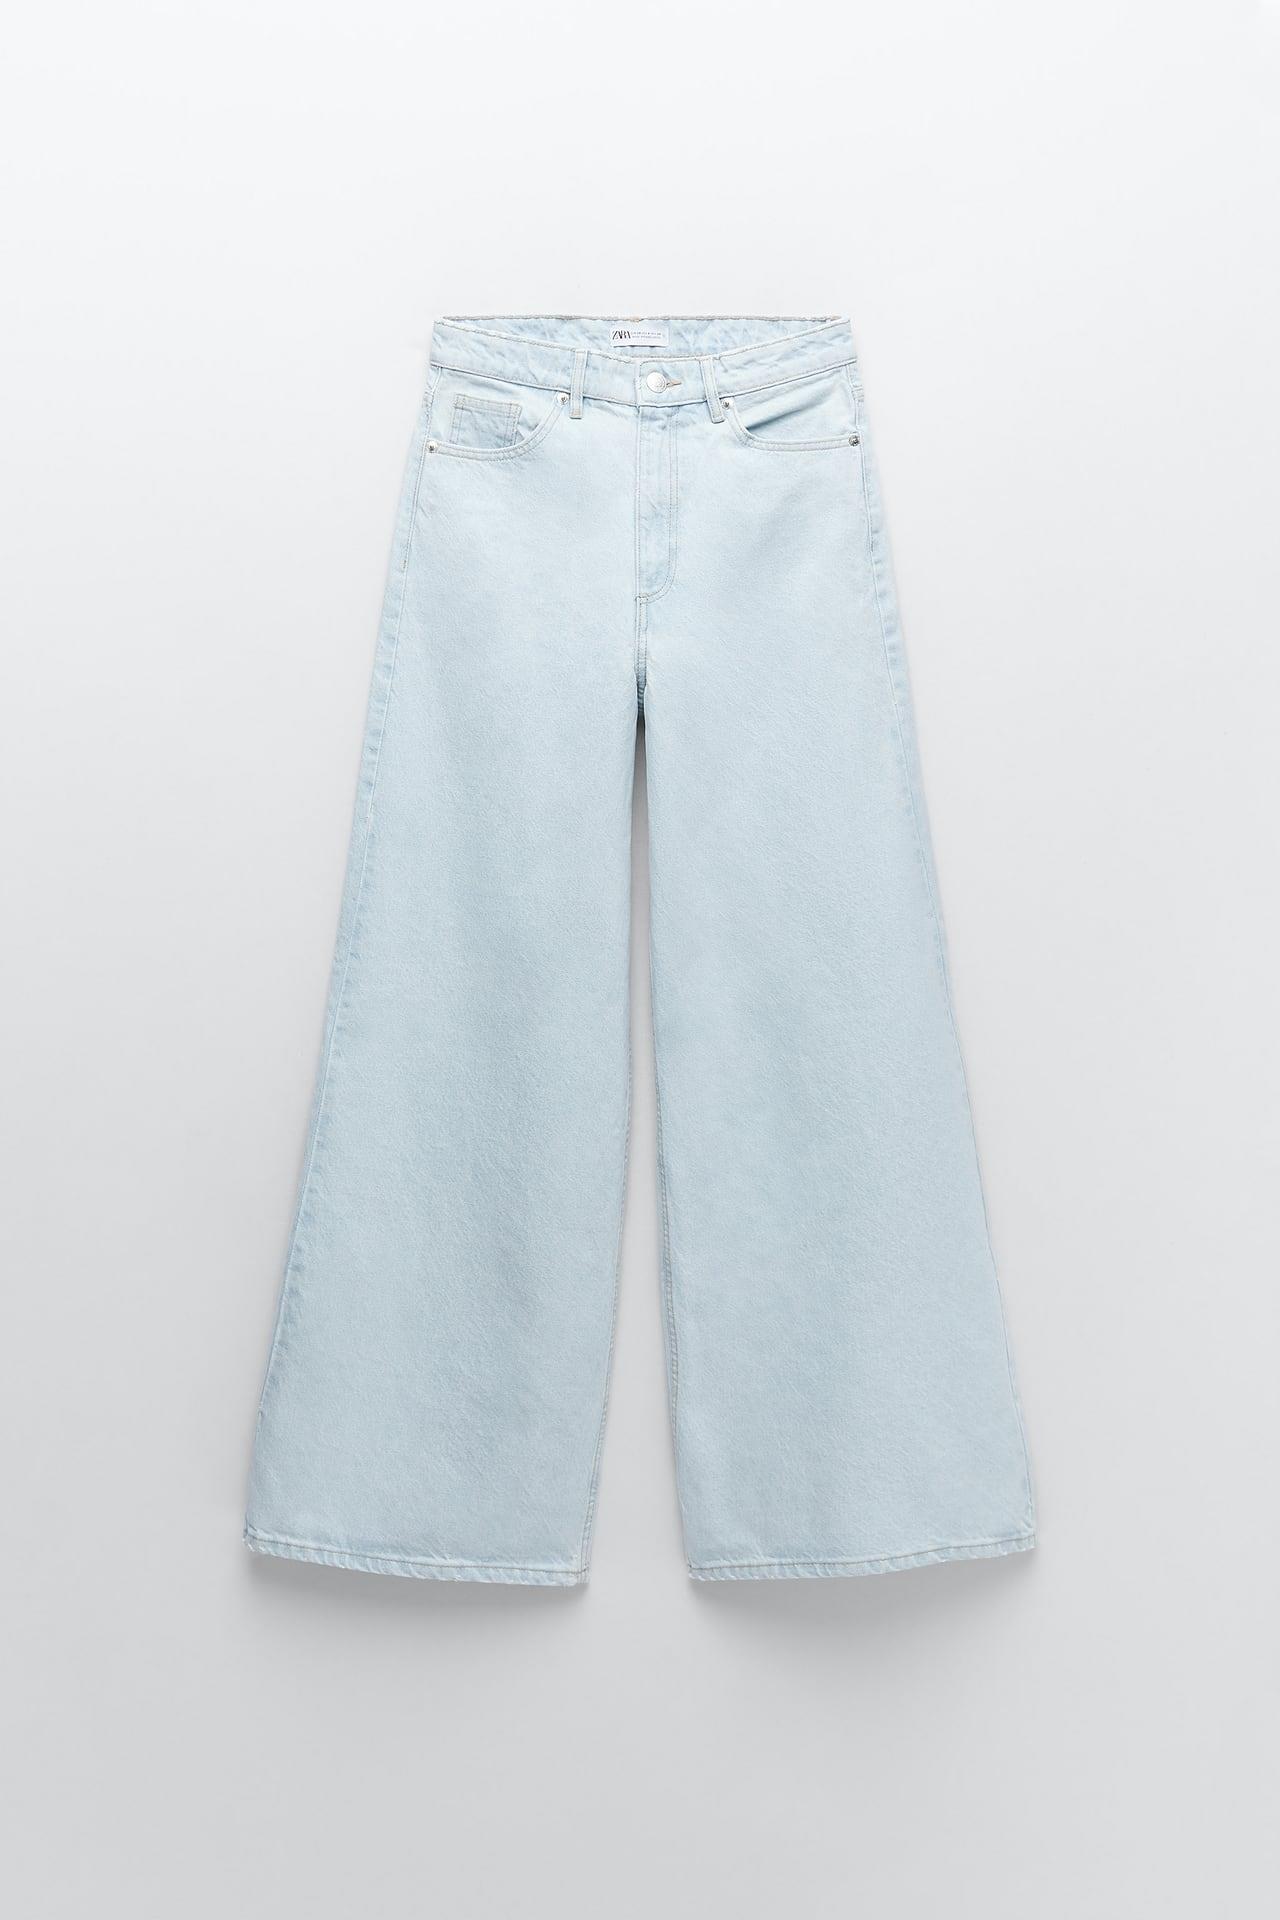 Pantalones 'wide leg' de Zara